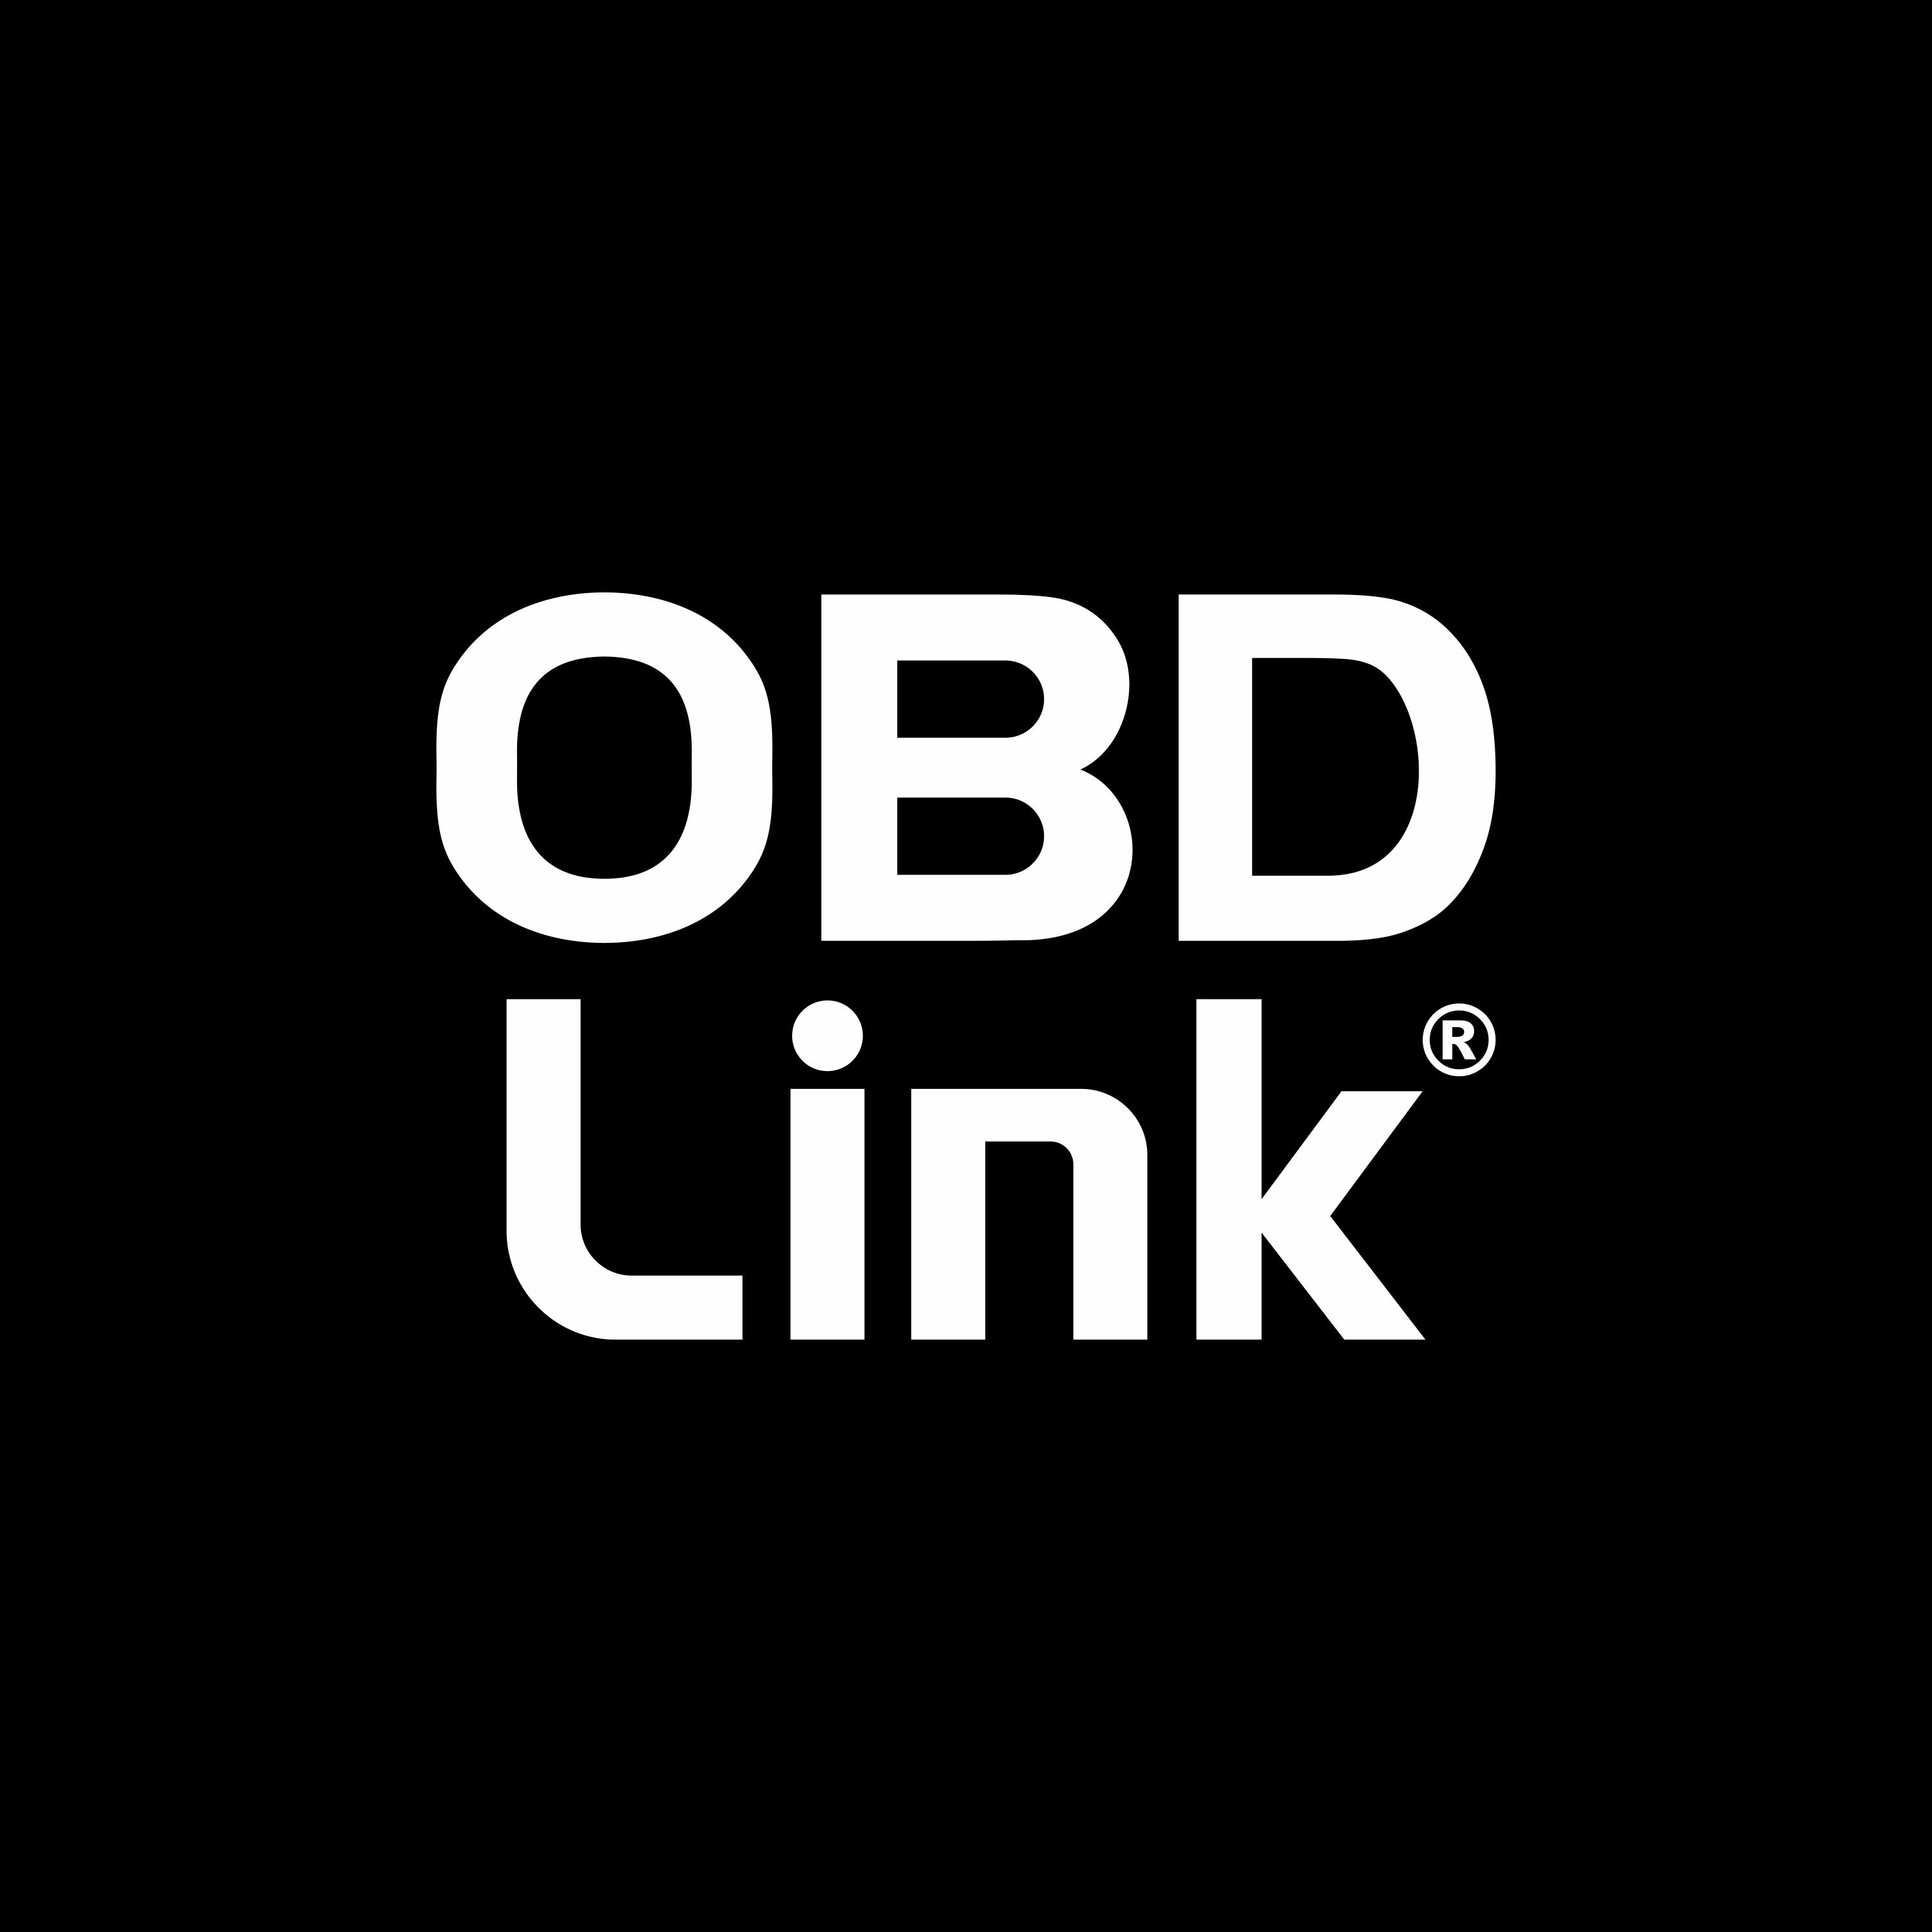 Makers of premium OBD2 scan tools